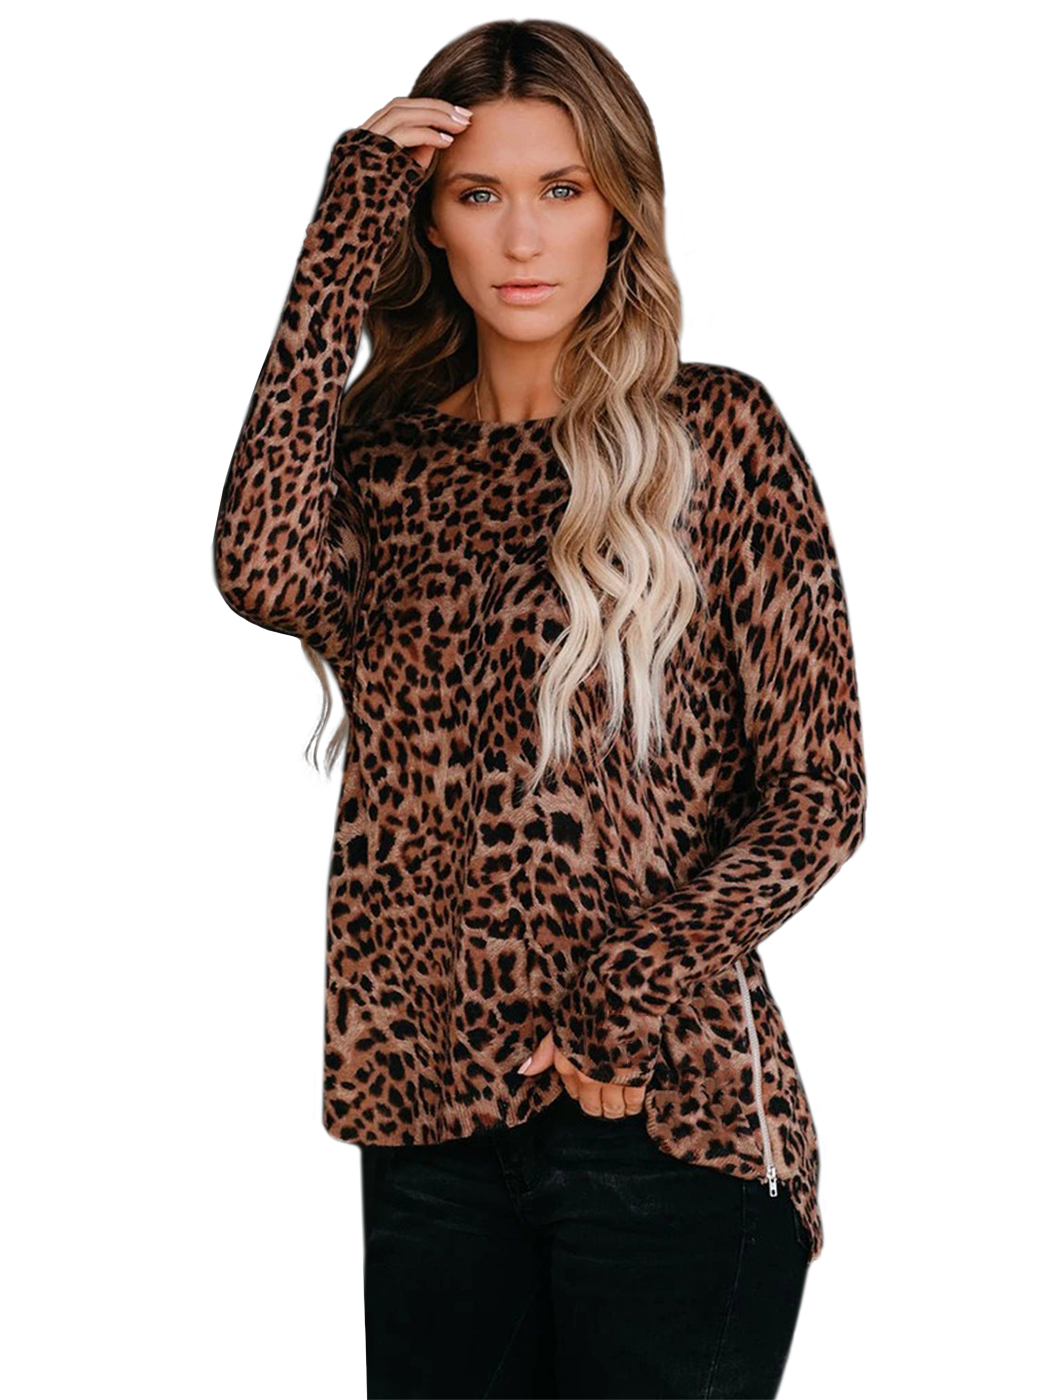 Fekuit Womens Pullover Tops Casual Sweatshirt Crewneck Long Sleeve Sweaters Fashion Animal Print Blouses